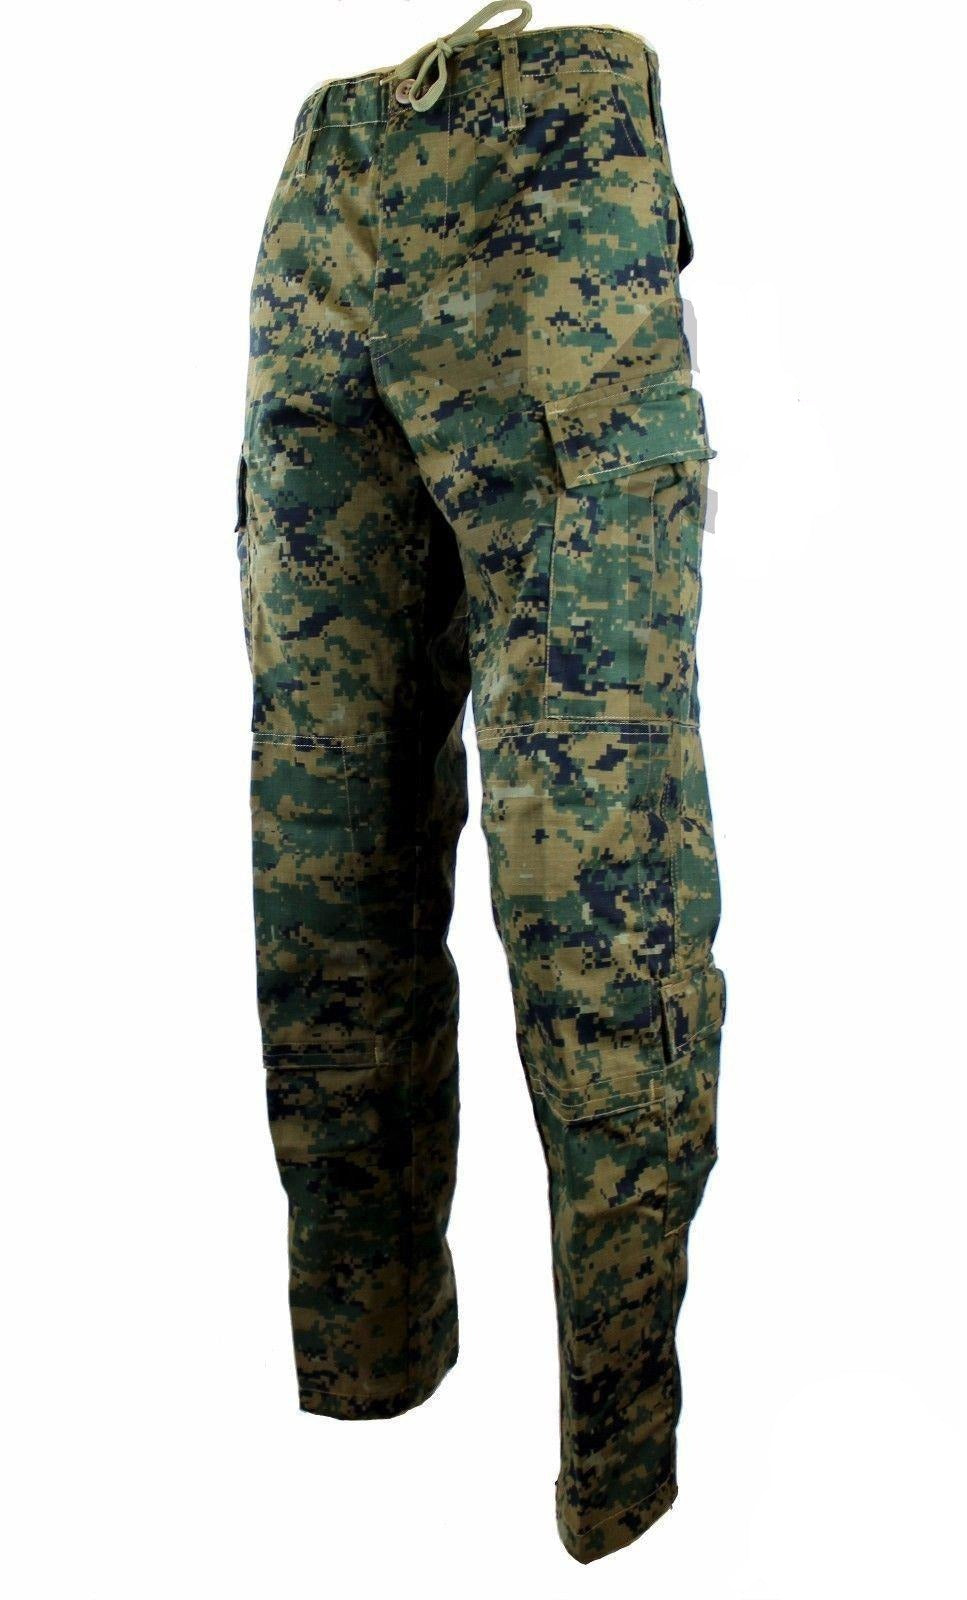 Digital Camo BDU Pants (MARPAT) 4X Large